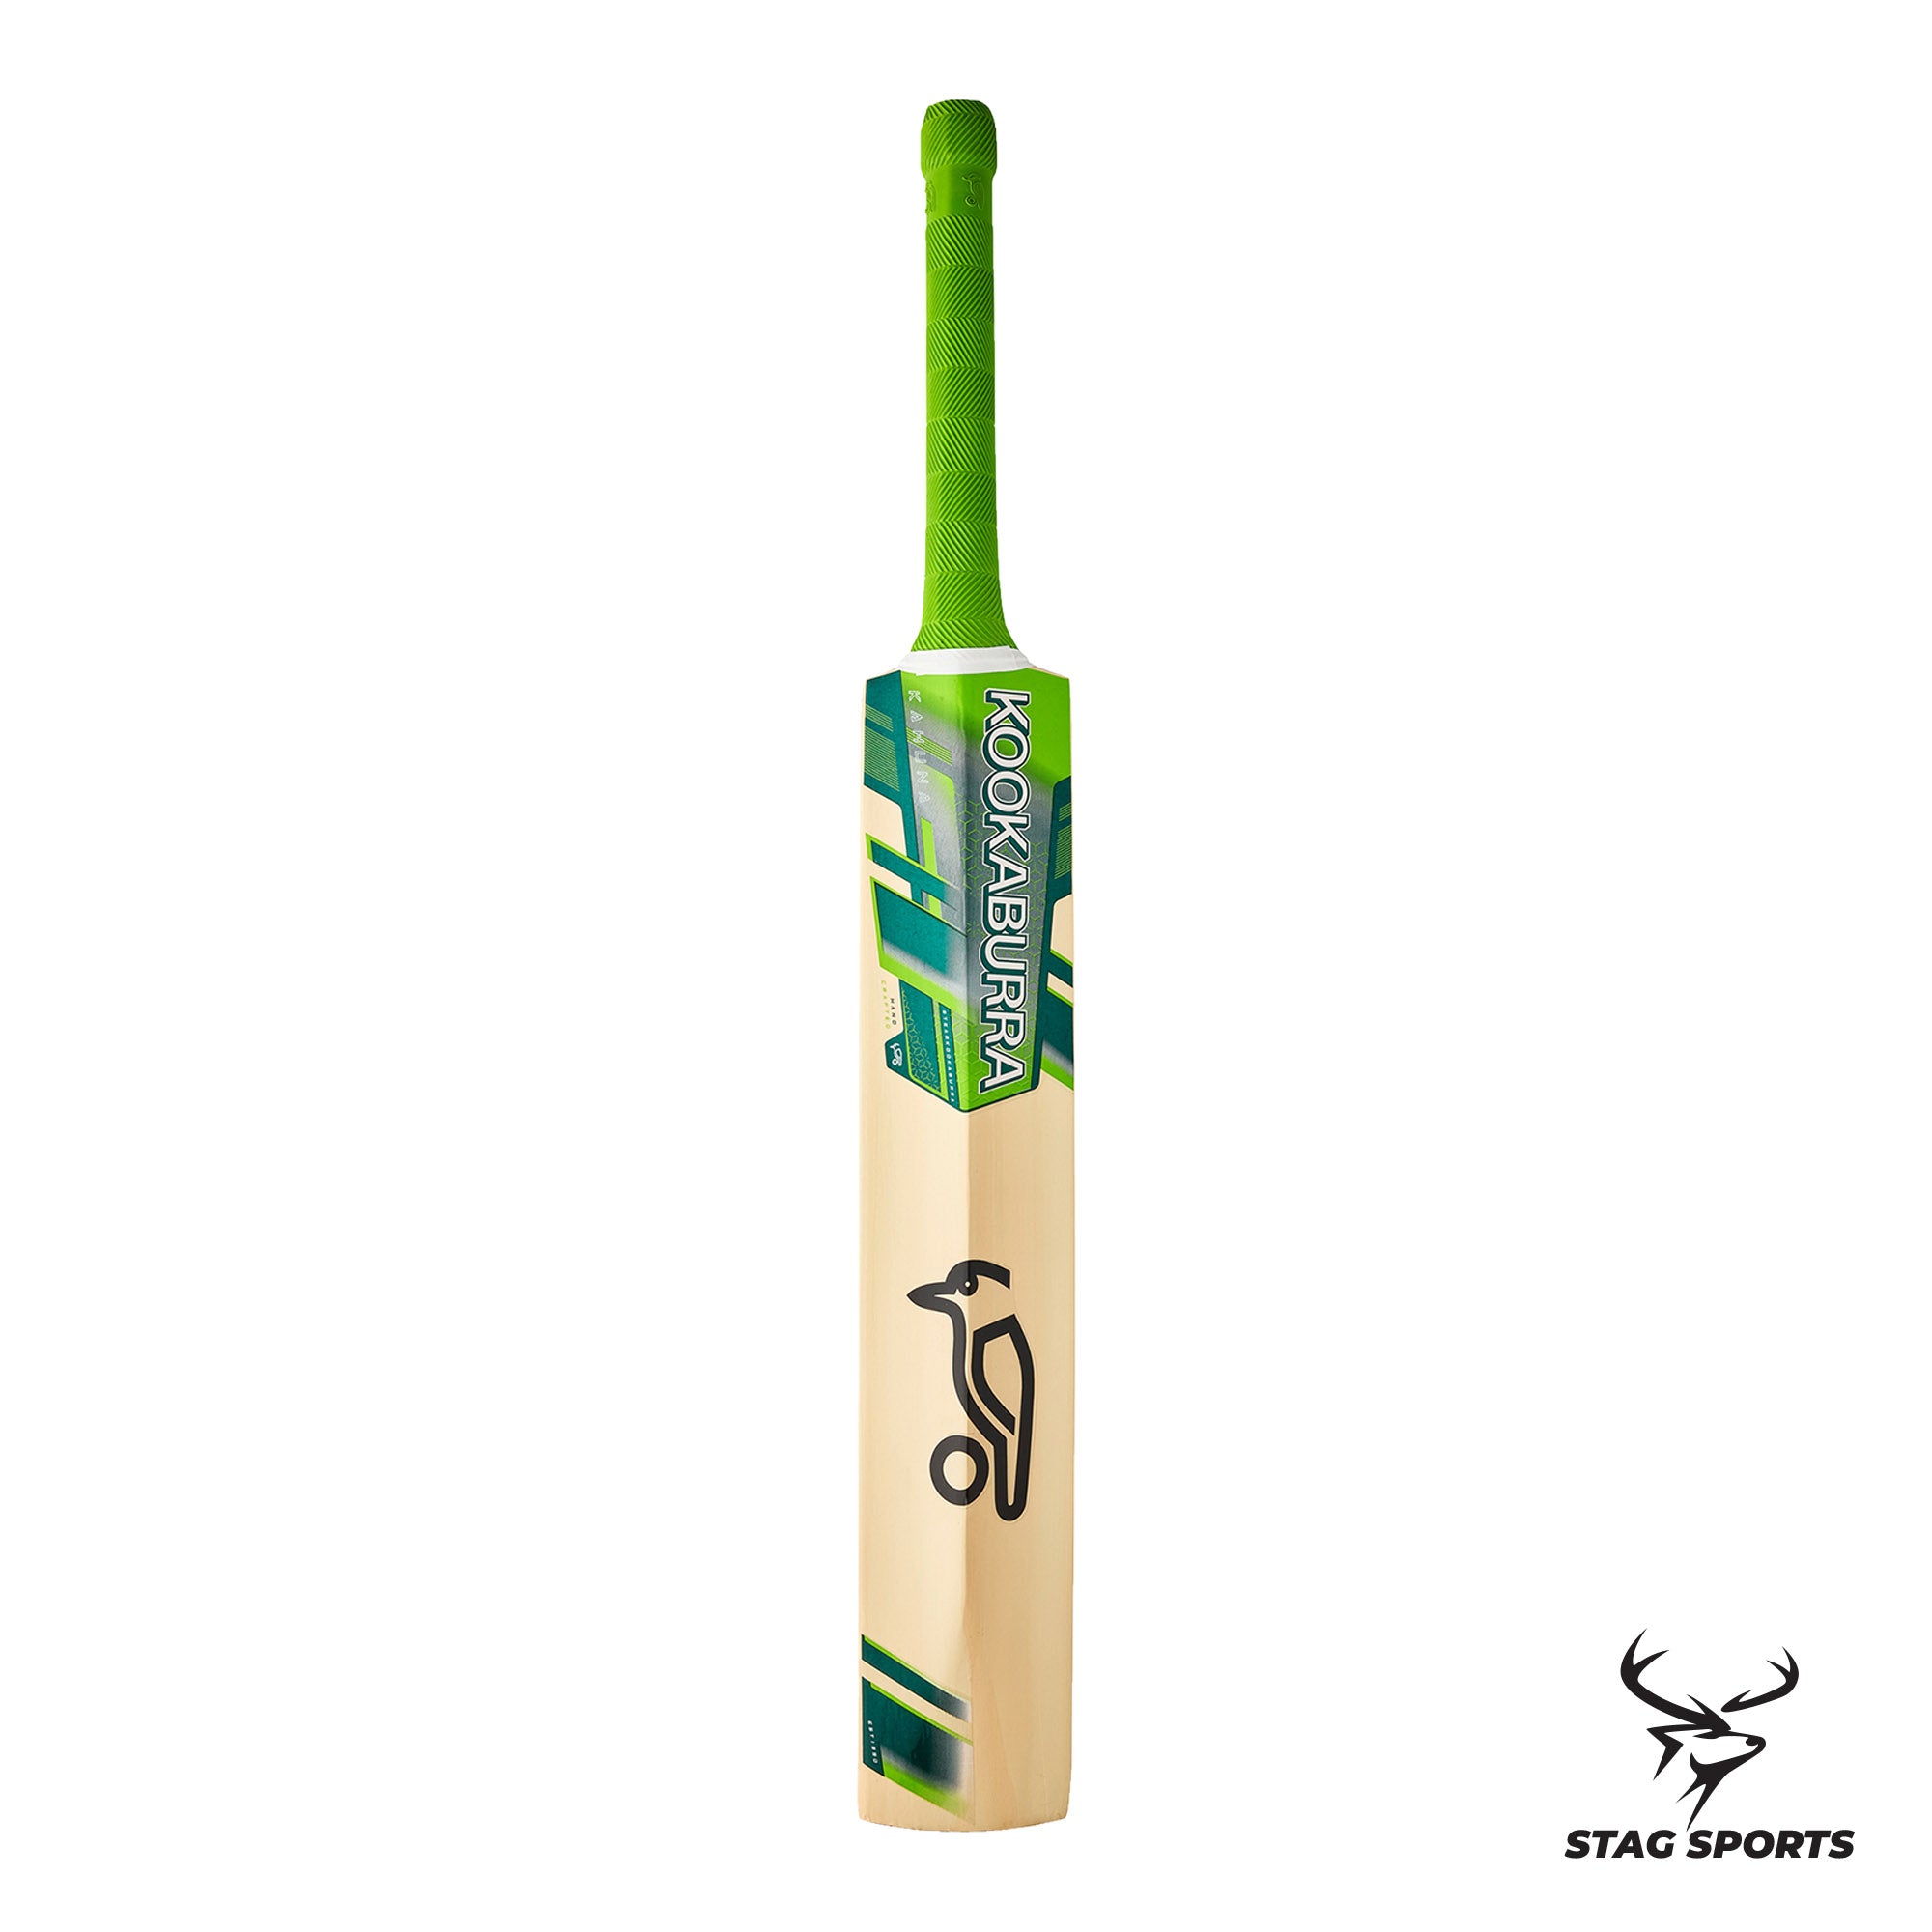 Kookaburra Kahuna Pro 9.0 Junior Cricket Bat